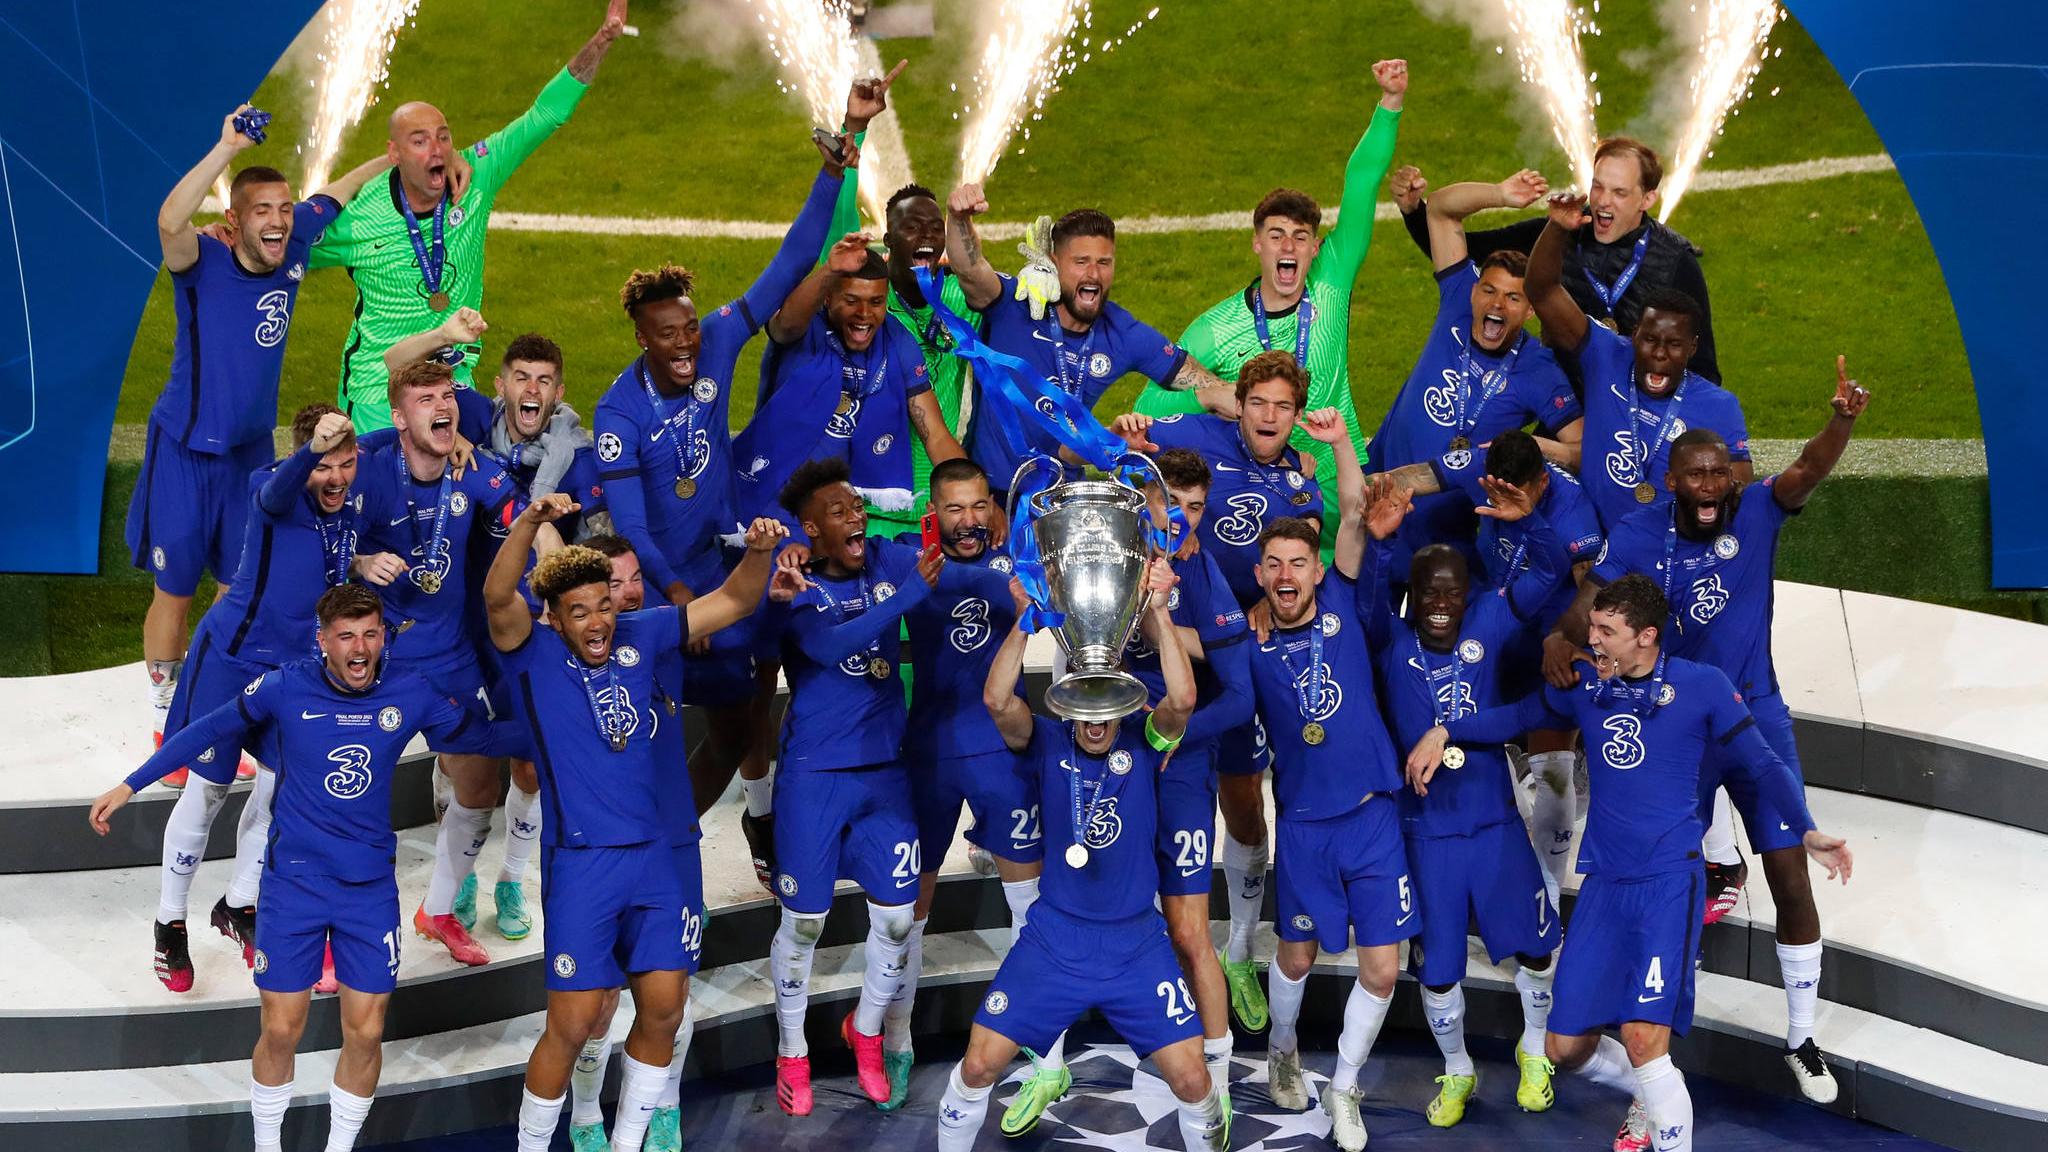 Manchester City favorito face a Chelsea na quarta final da Champions em  solo luso - Liga dos Campeões - SAPO Desporto